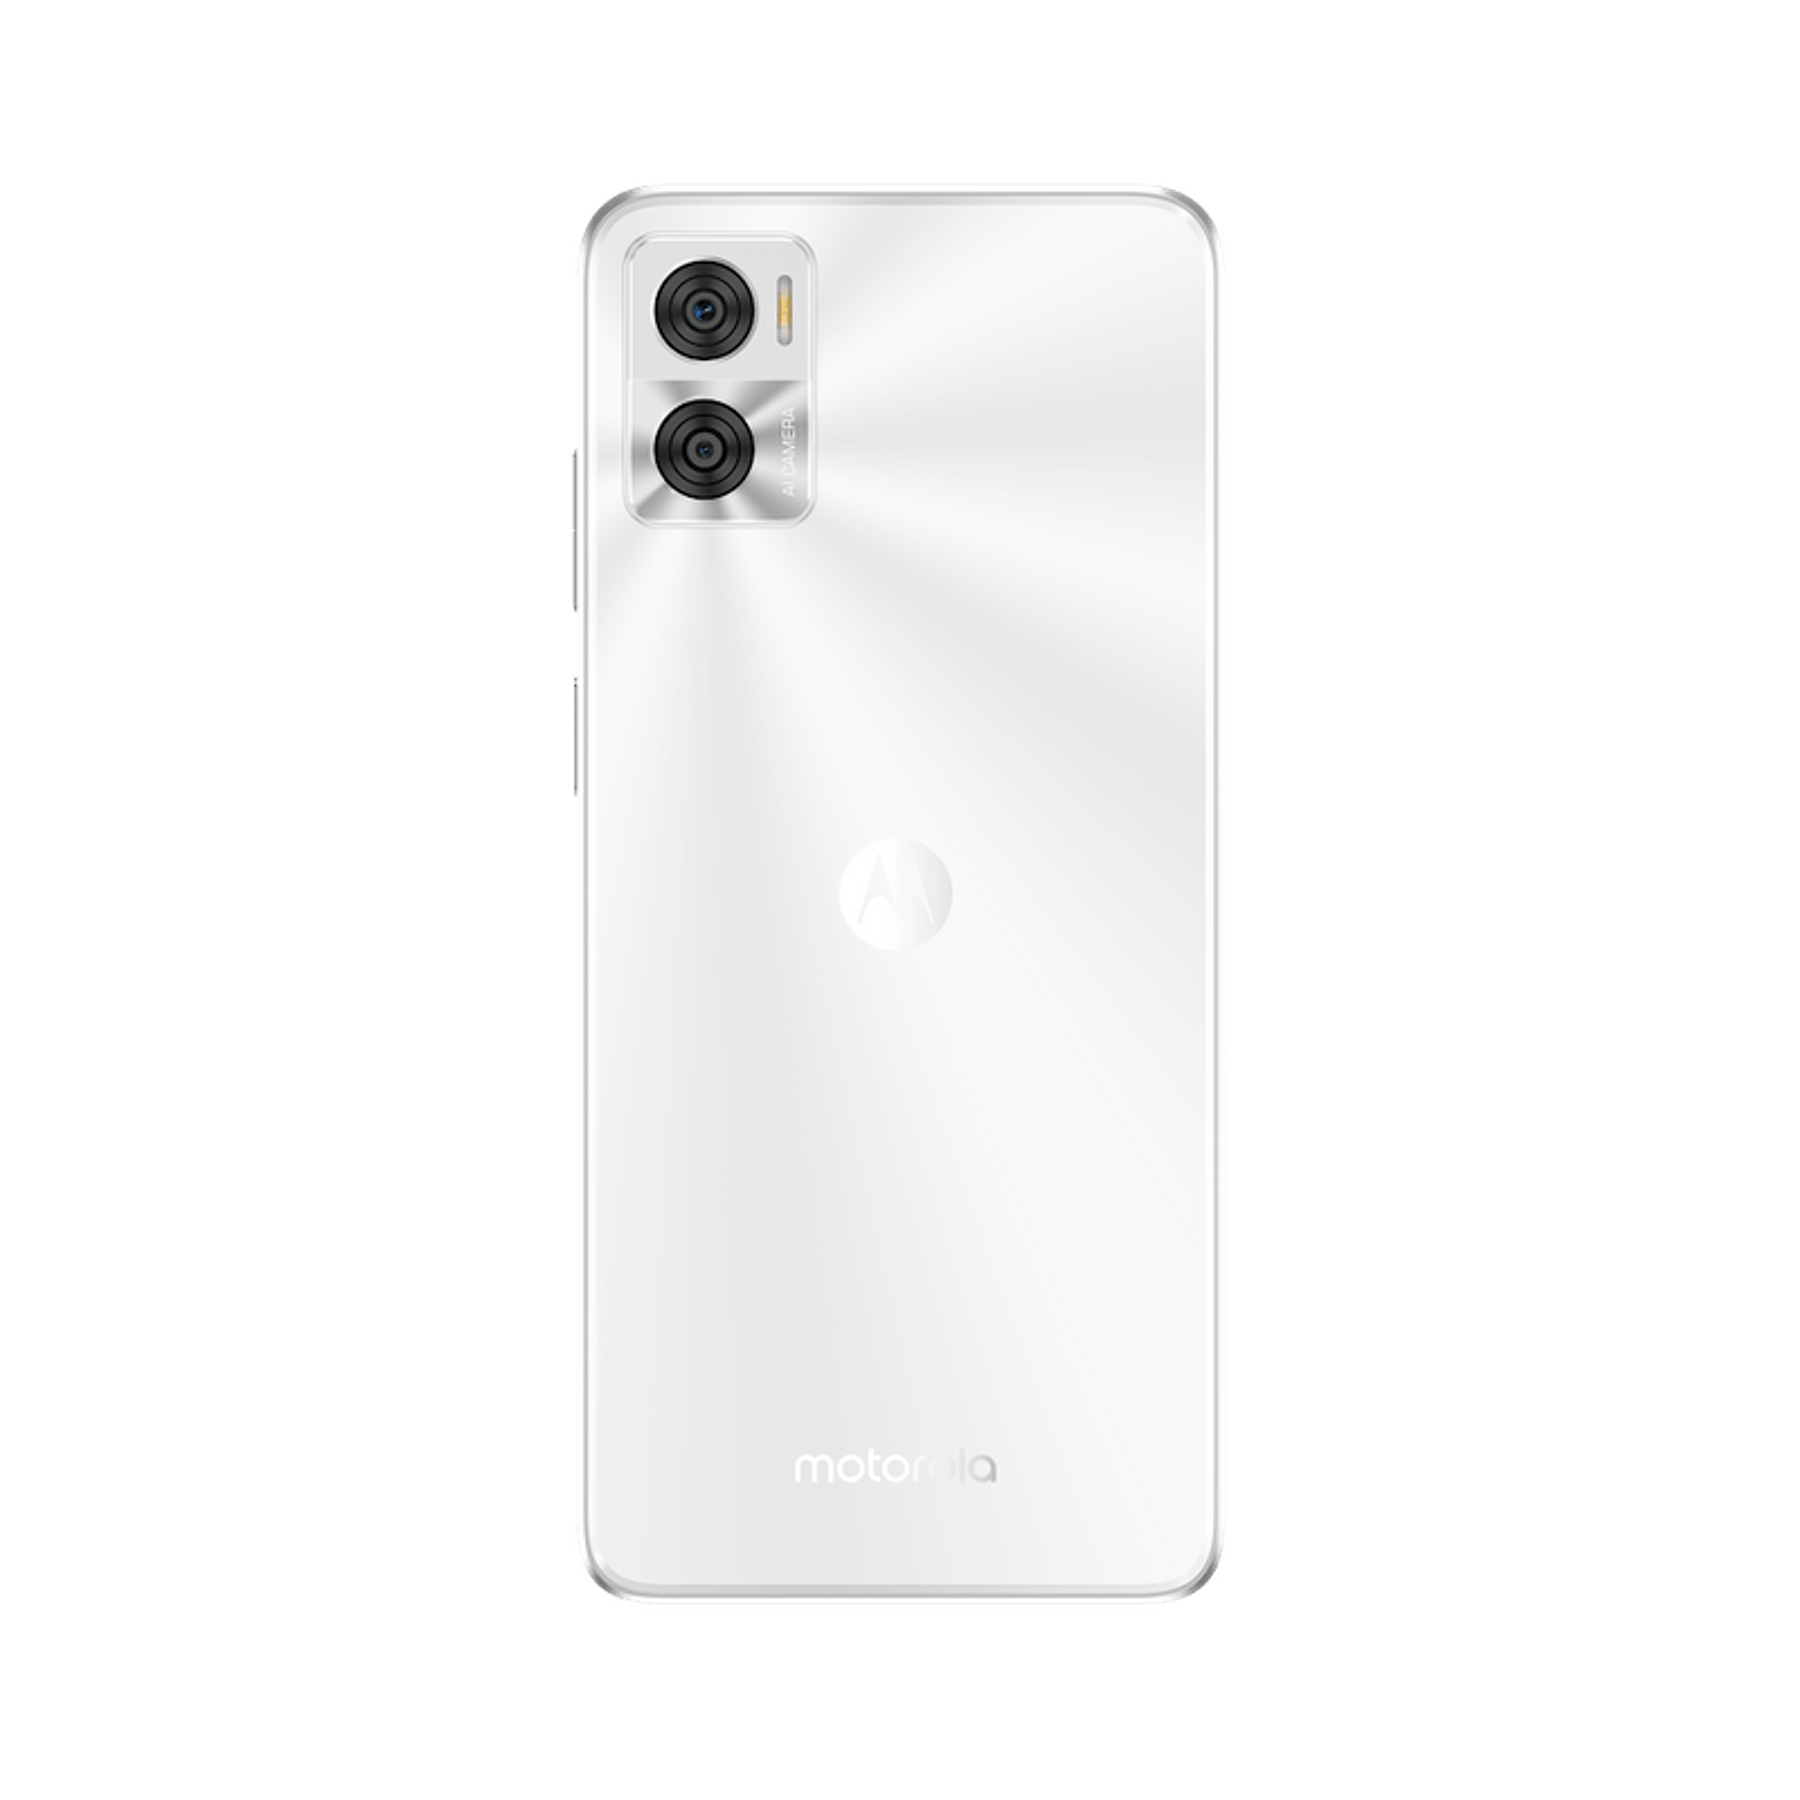 Motorola E22i Celular 6.5 Pulgadas Blanco